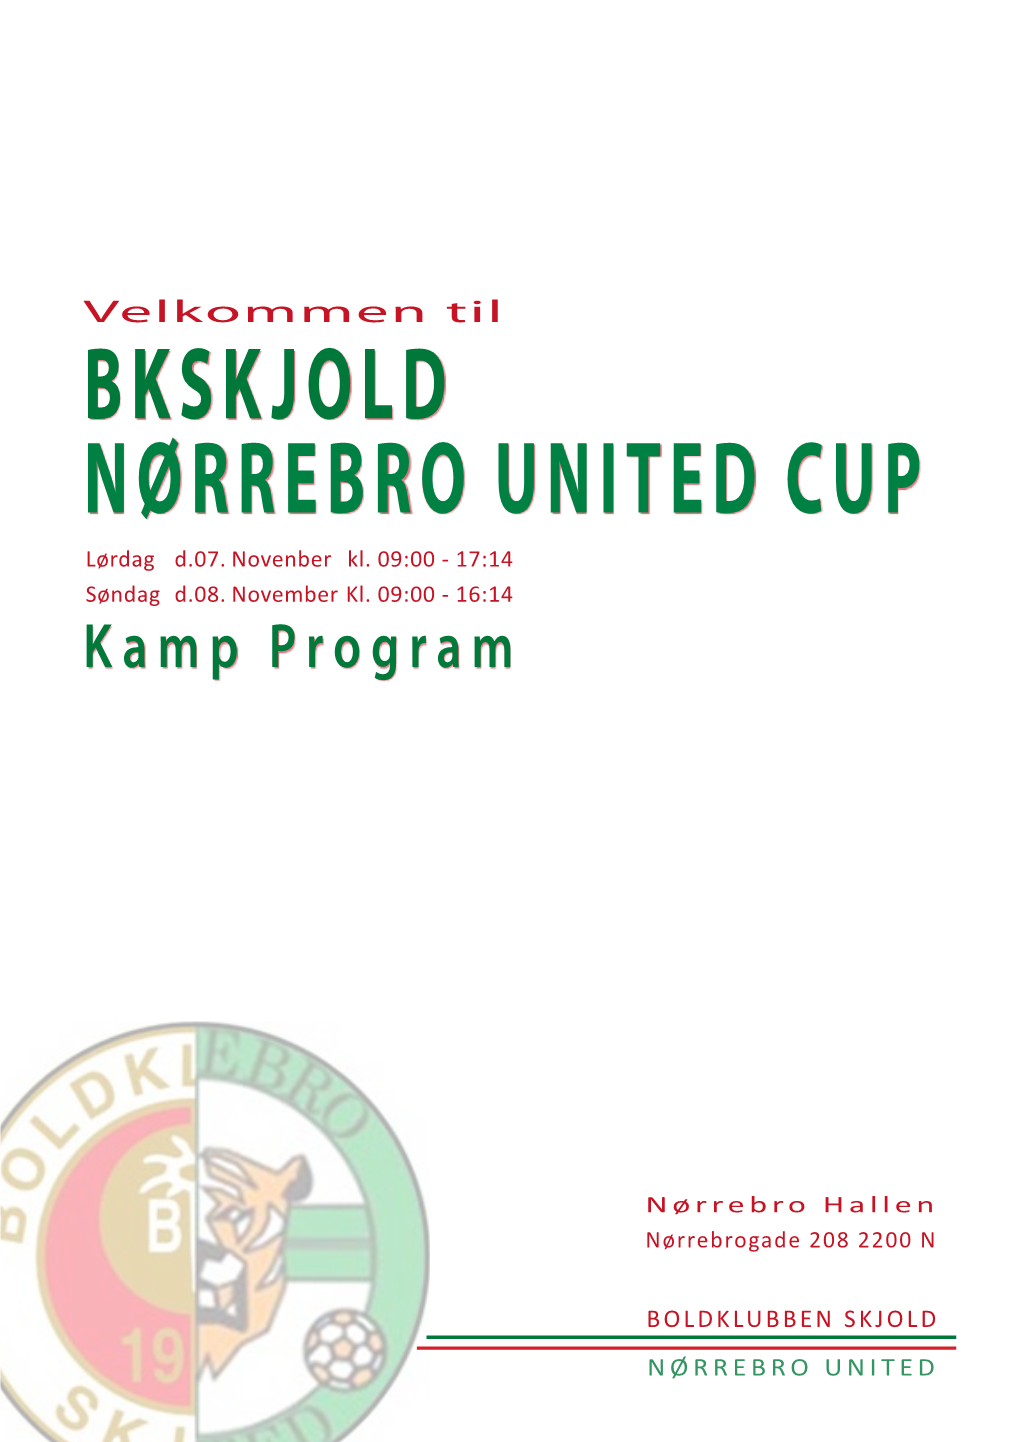 Bkskjold Nørrebro United